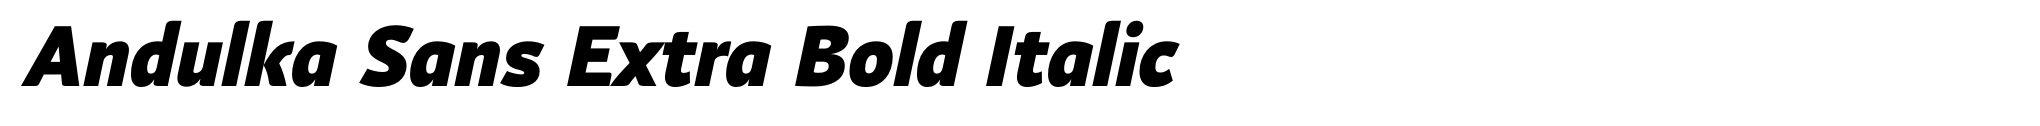 Andulka Sans Extra Bold Italic image